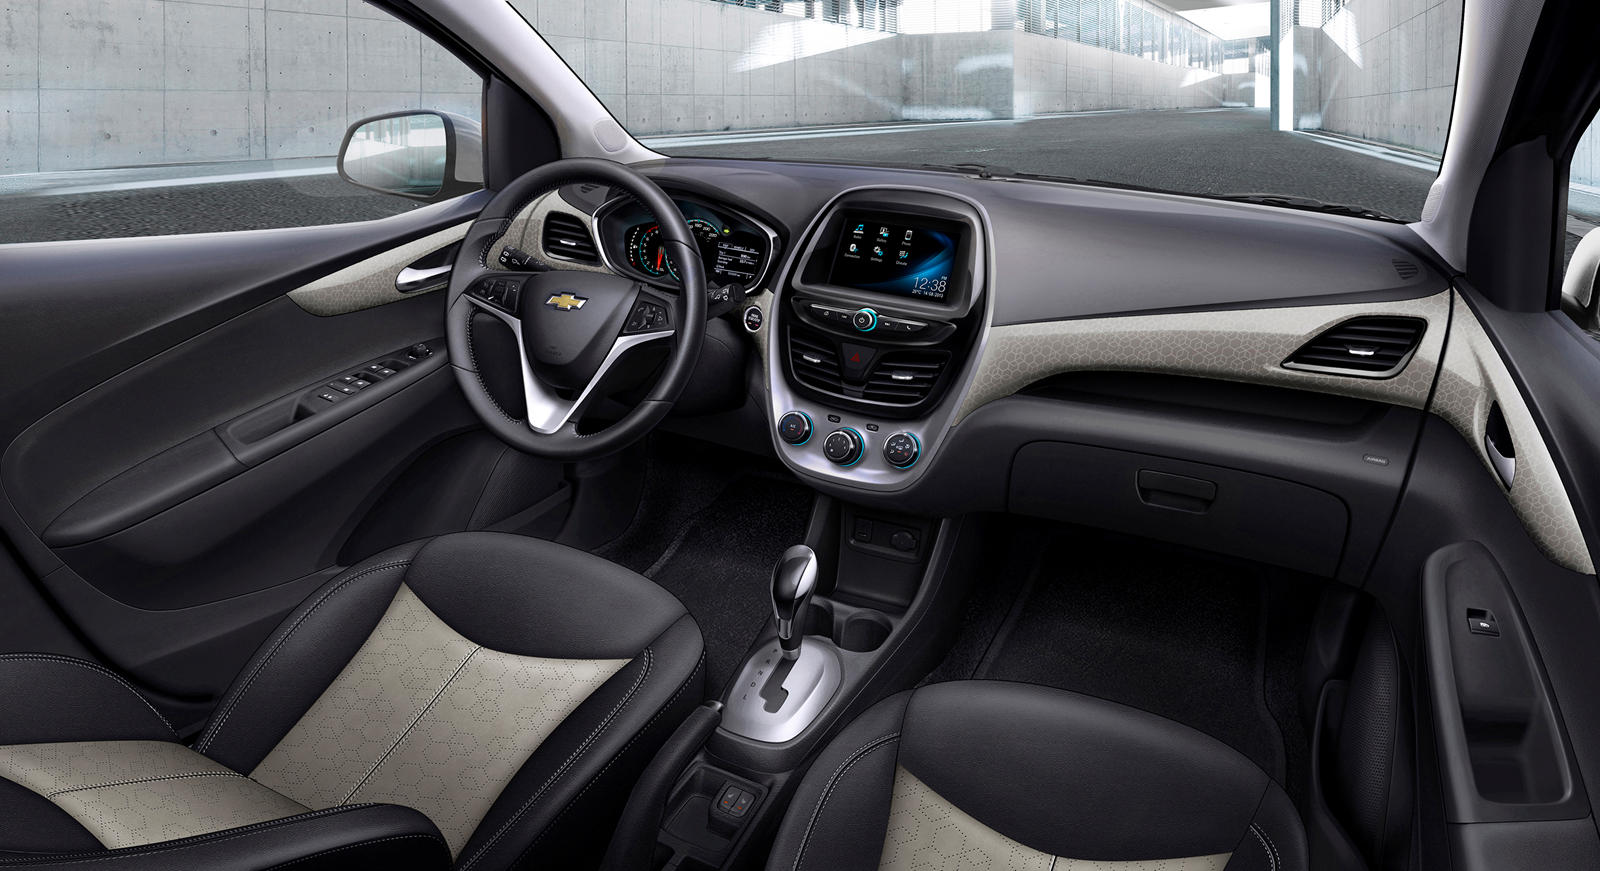 2021 Chevrolet Spark Dashboard